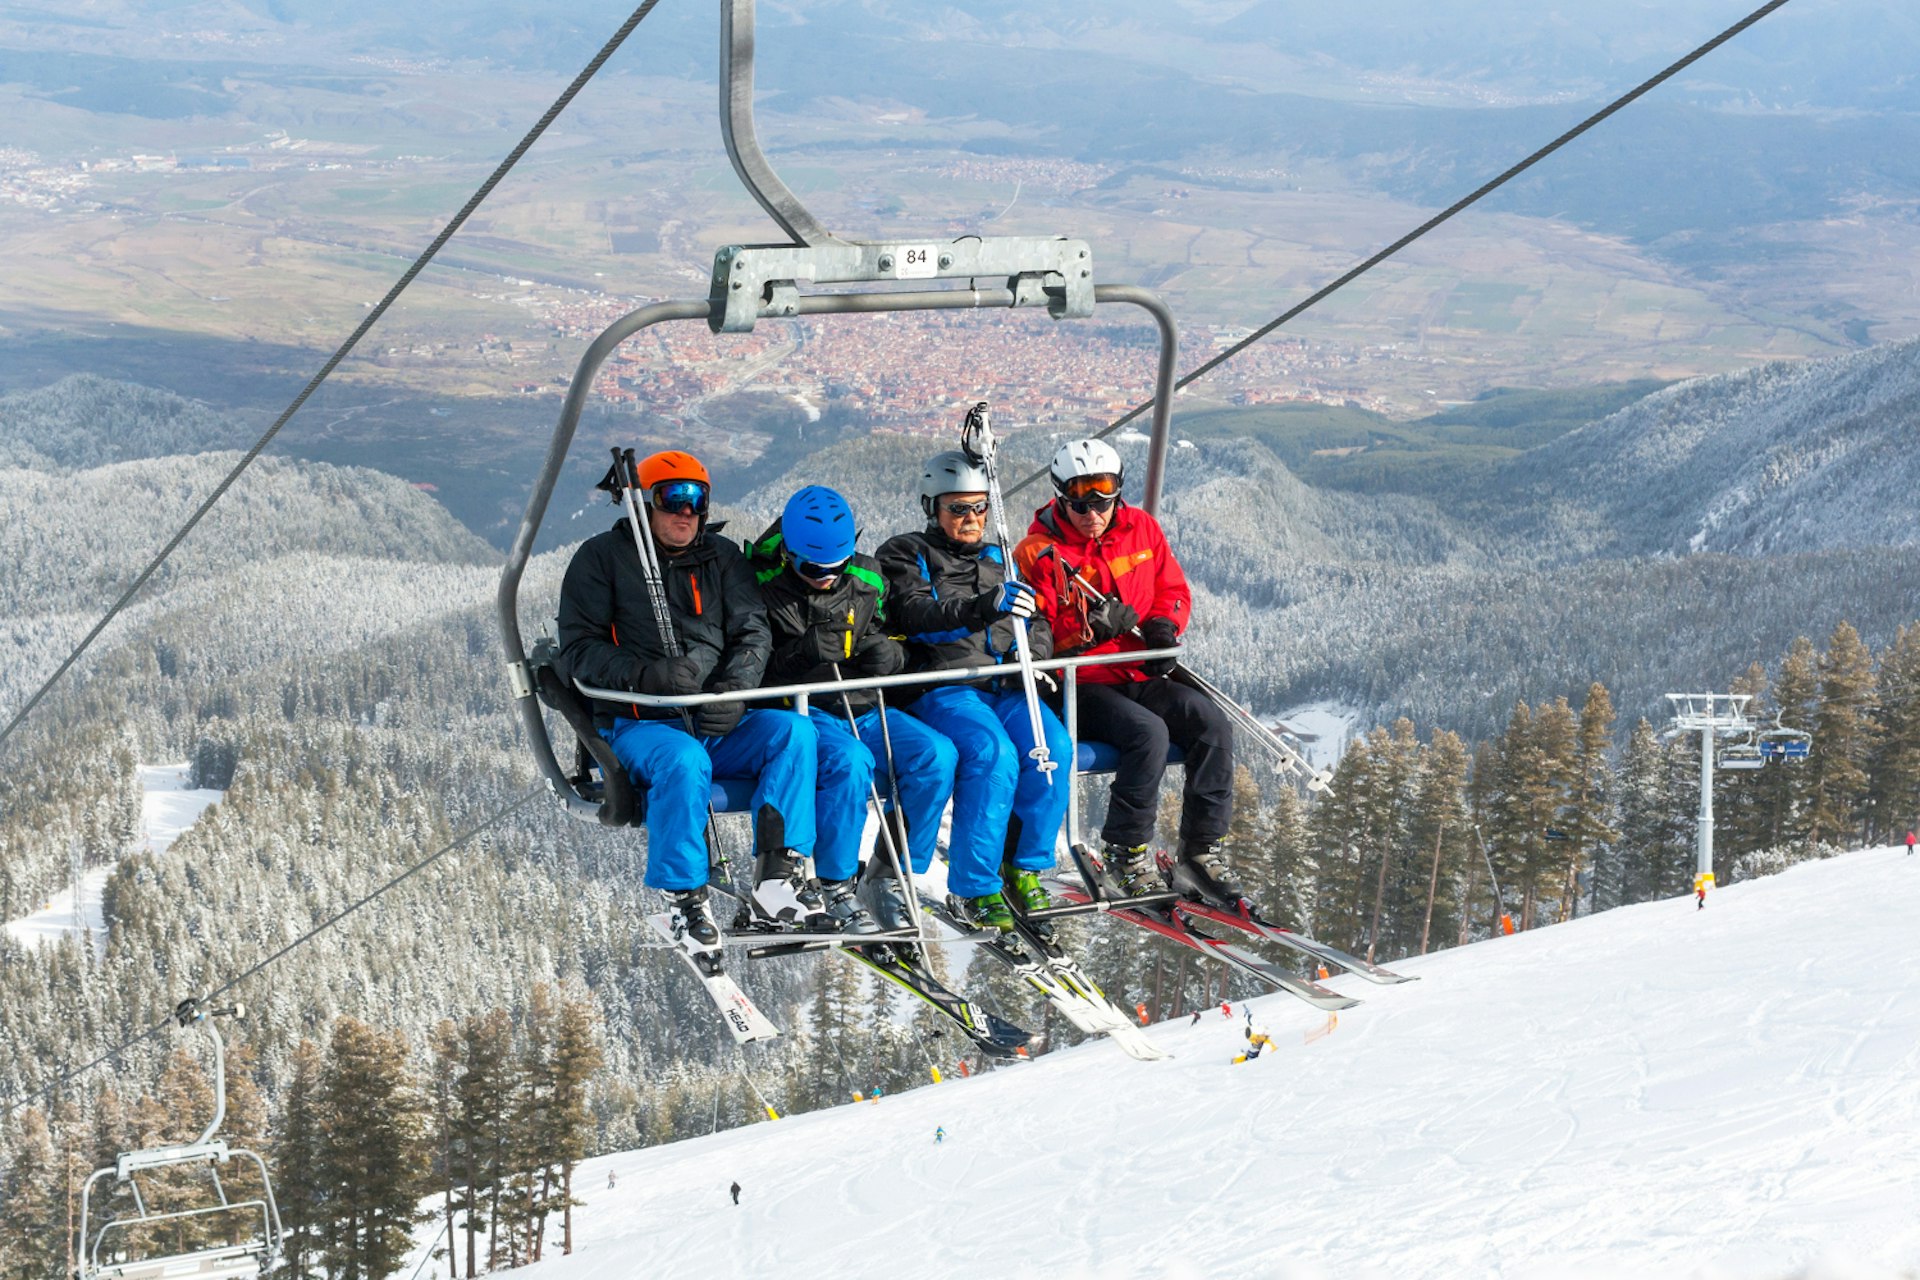 Bansko, Bulgaria - March 4, 2016: Ski resort Bansko, Bulgaria aerial view, skiers on lift, people skiing on slopes, town panorama